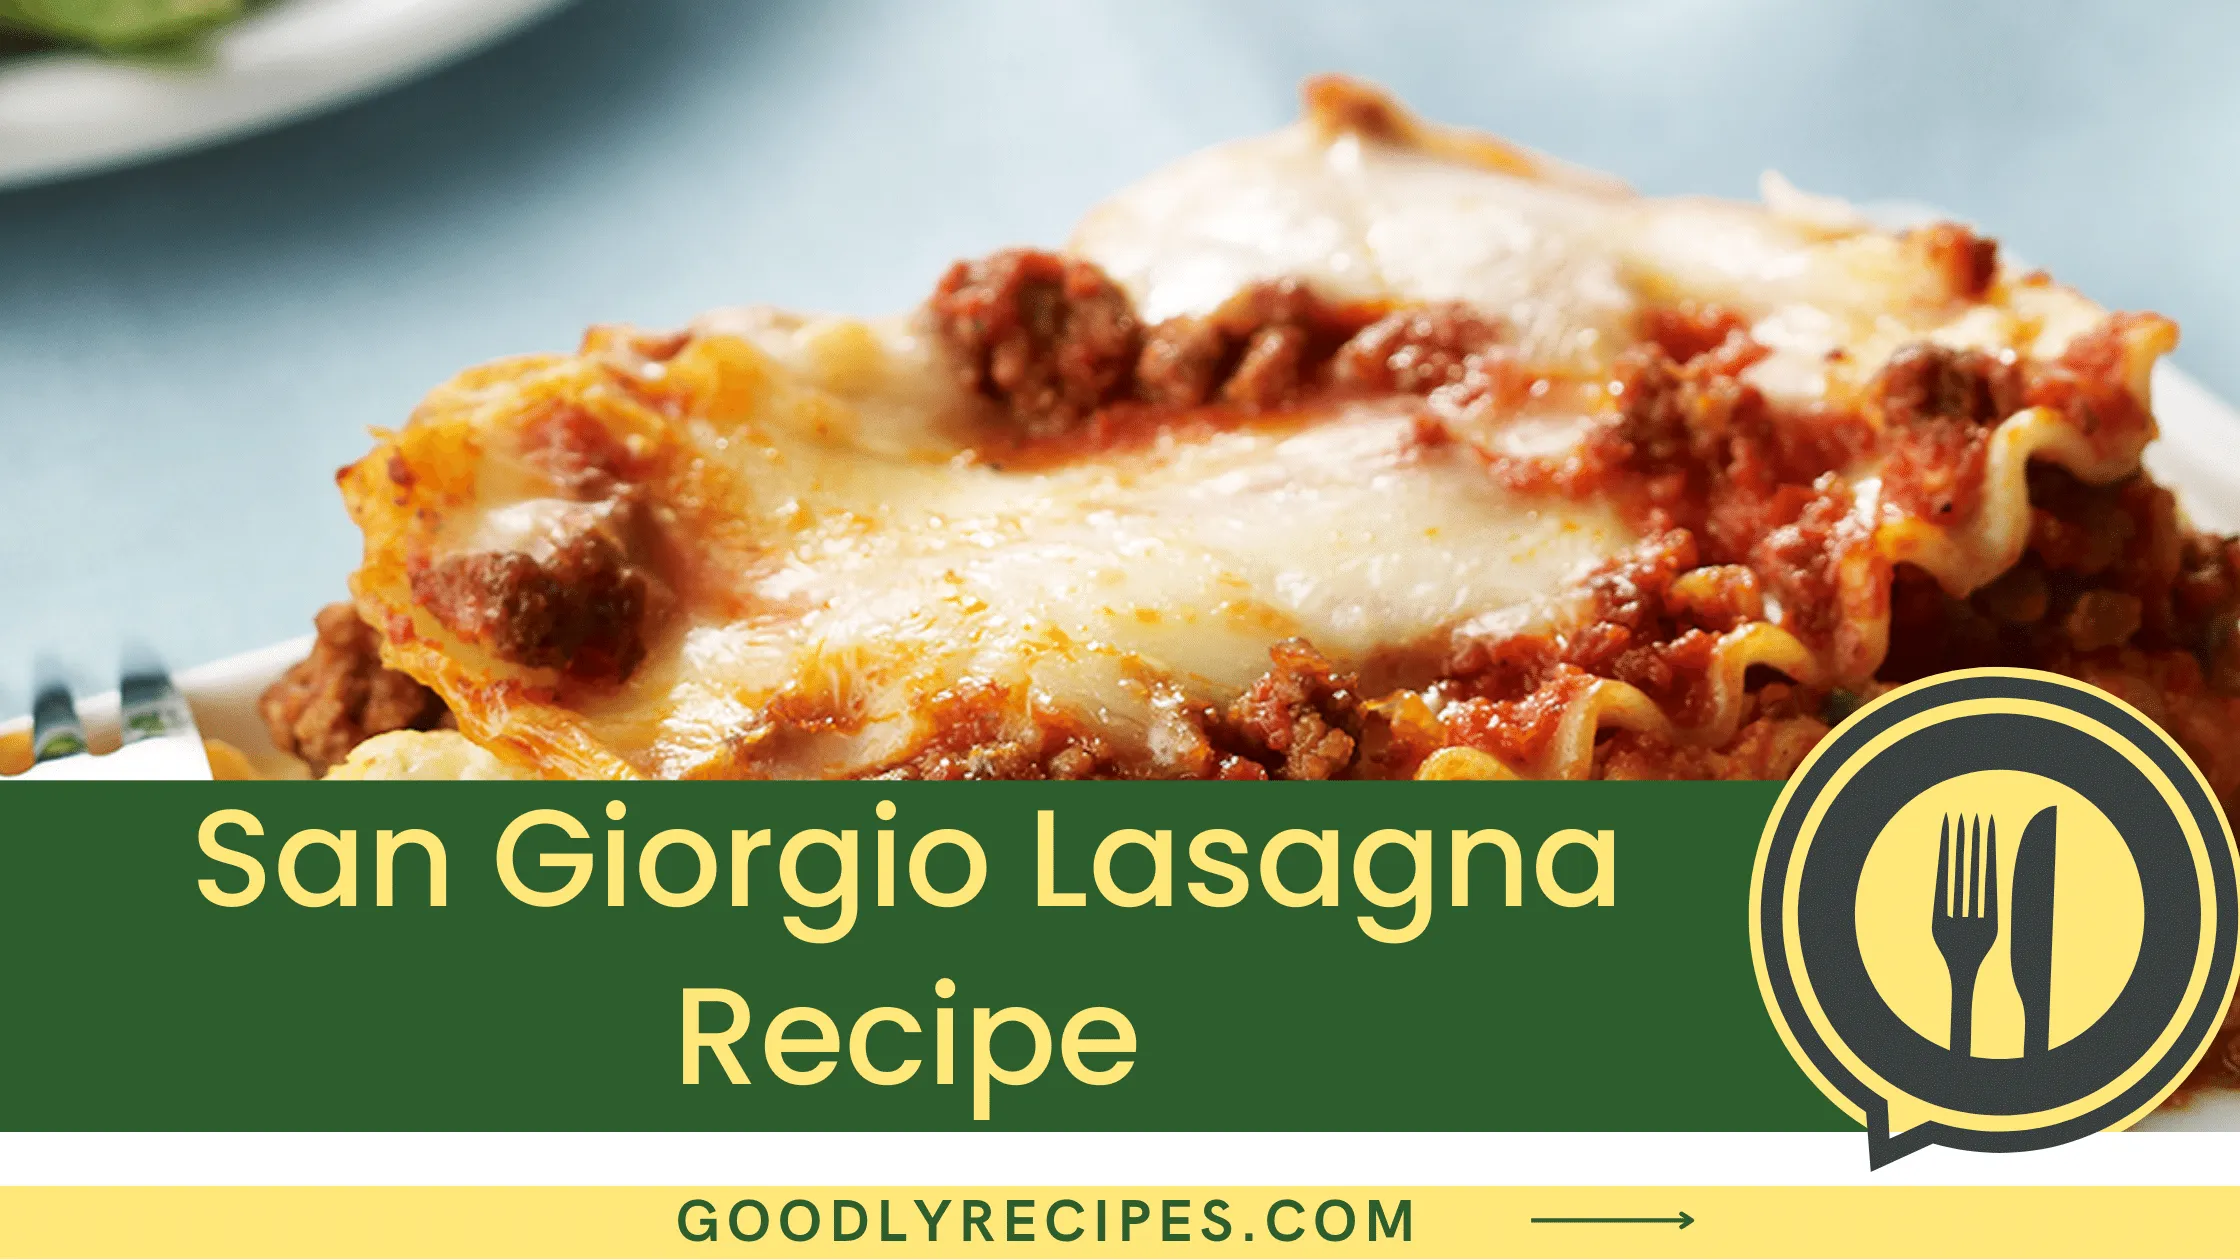 What Is San Giorgio Lasagna?